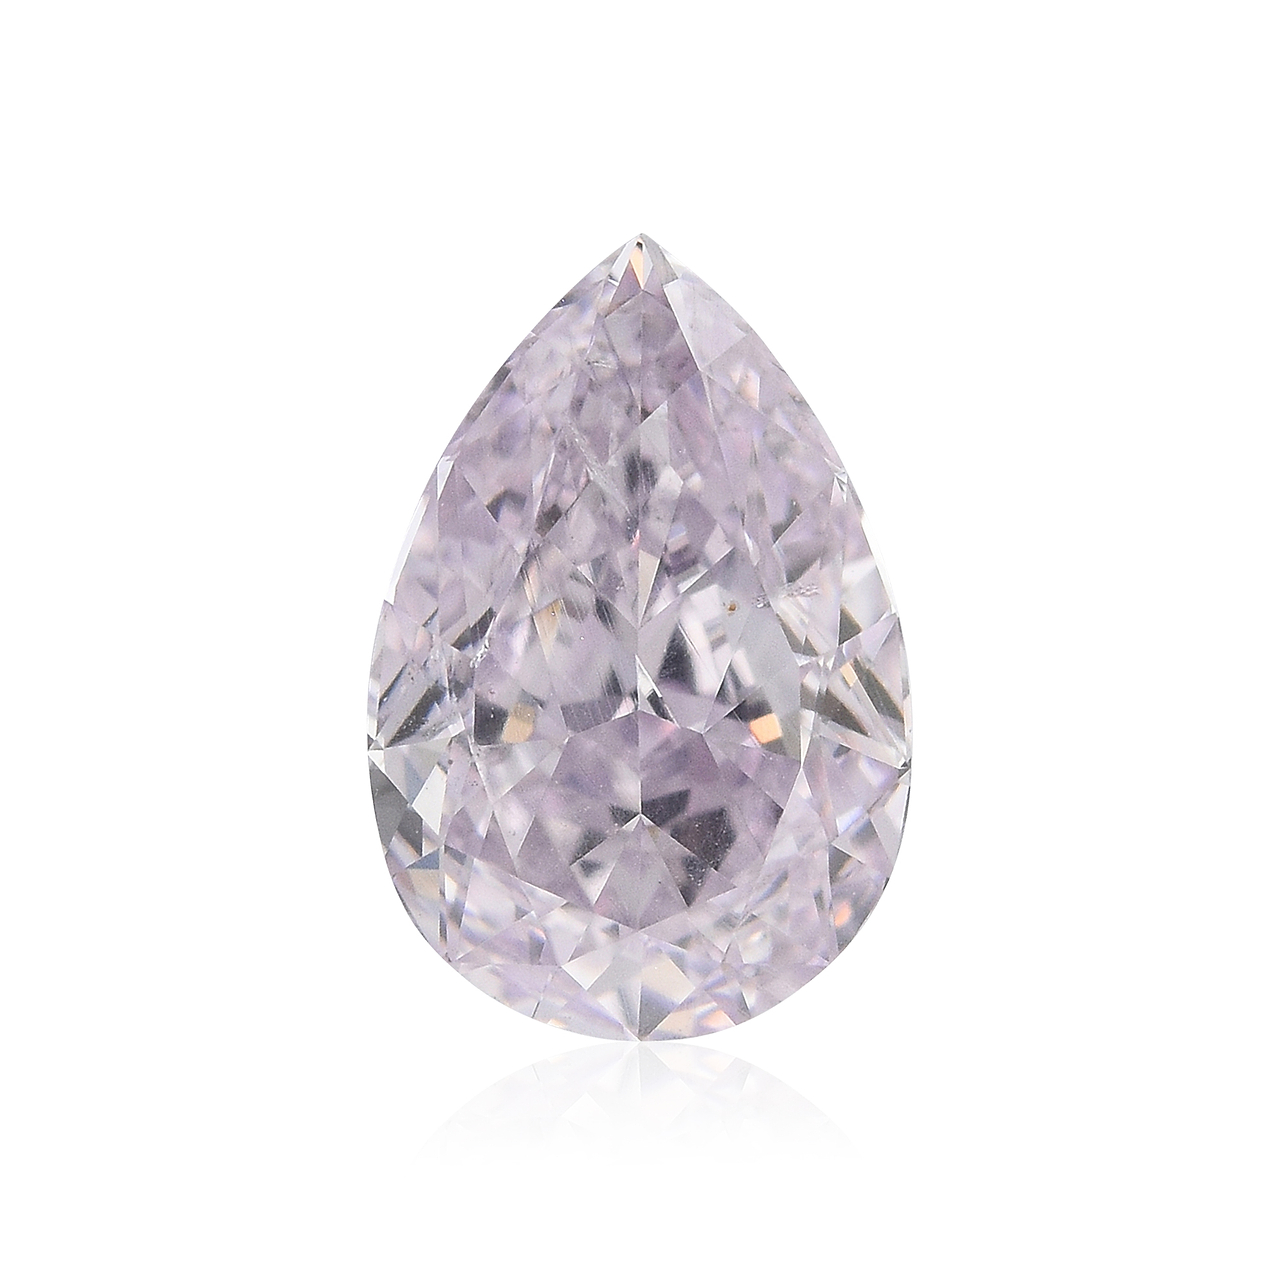 0.94 carat, Fancy Light Pinkish Purple Diamond, Pear Shape, SI2 Clarity,  GIA, SKU 578845